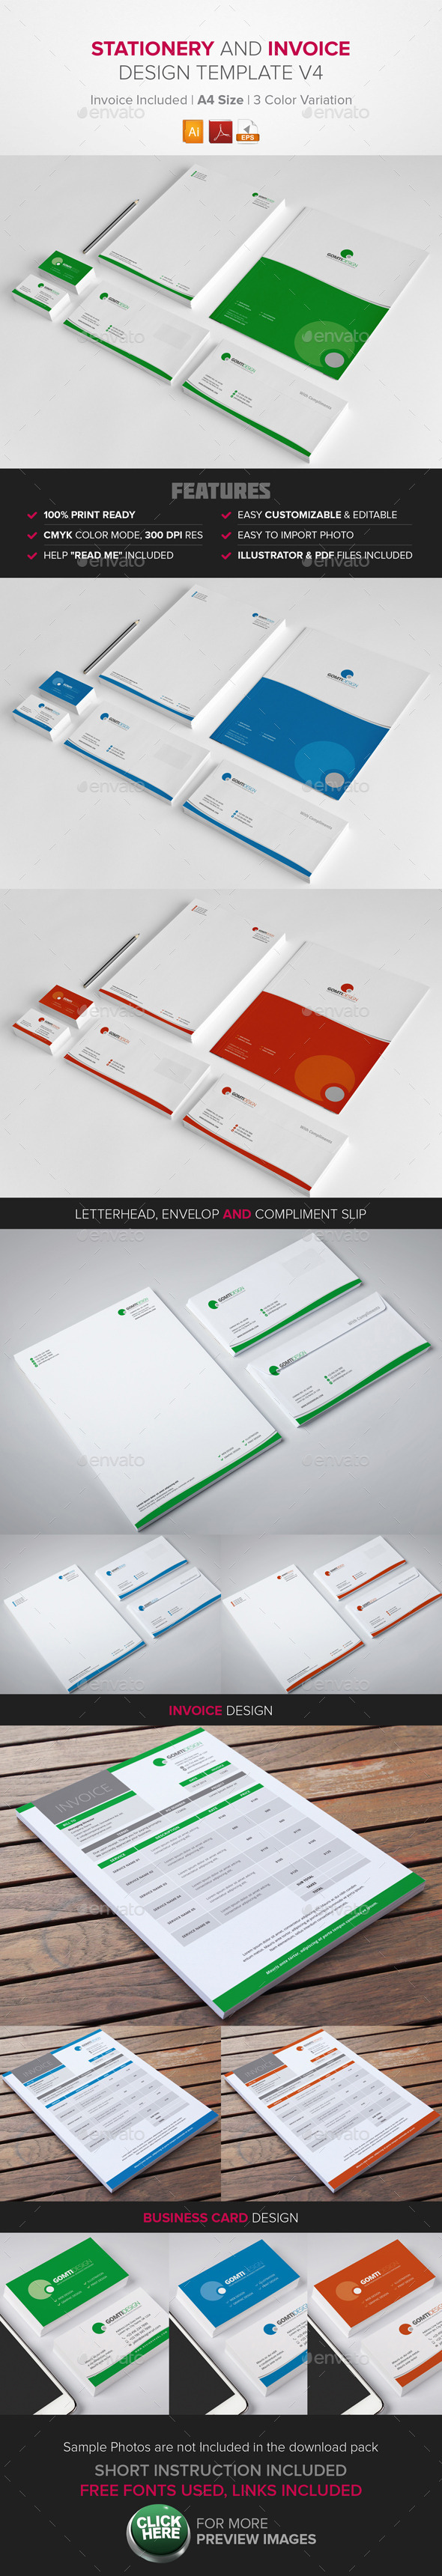 Stationary & Invoice Design Template v4